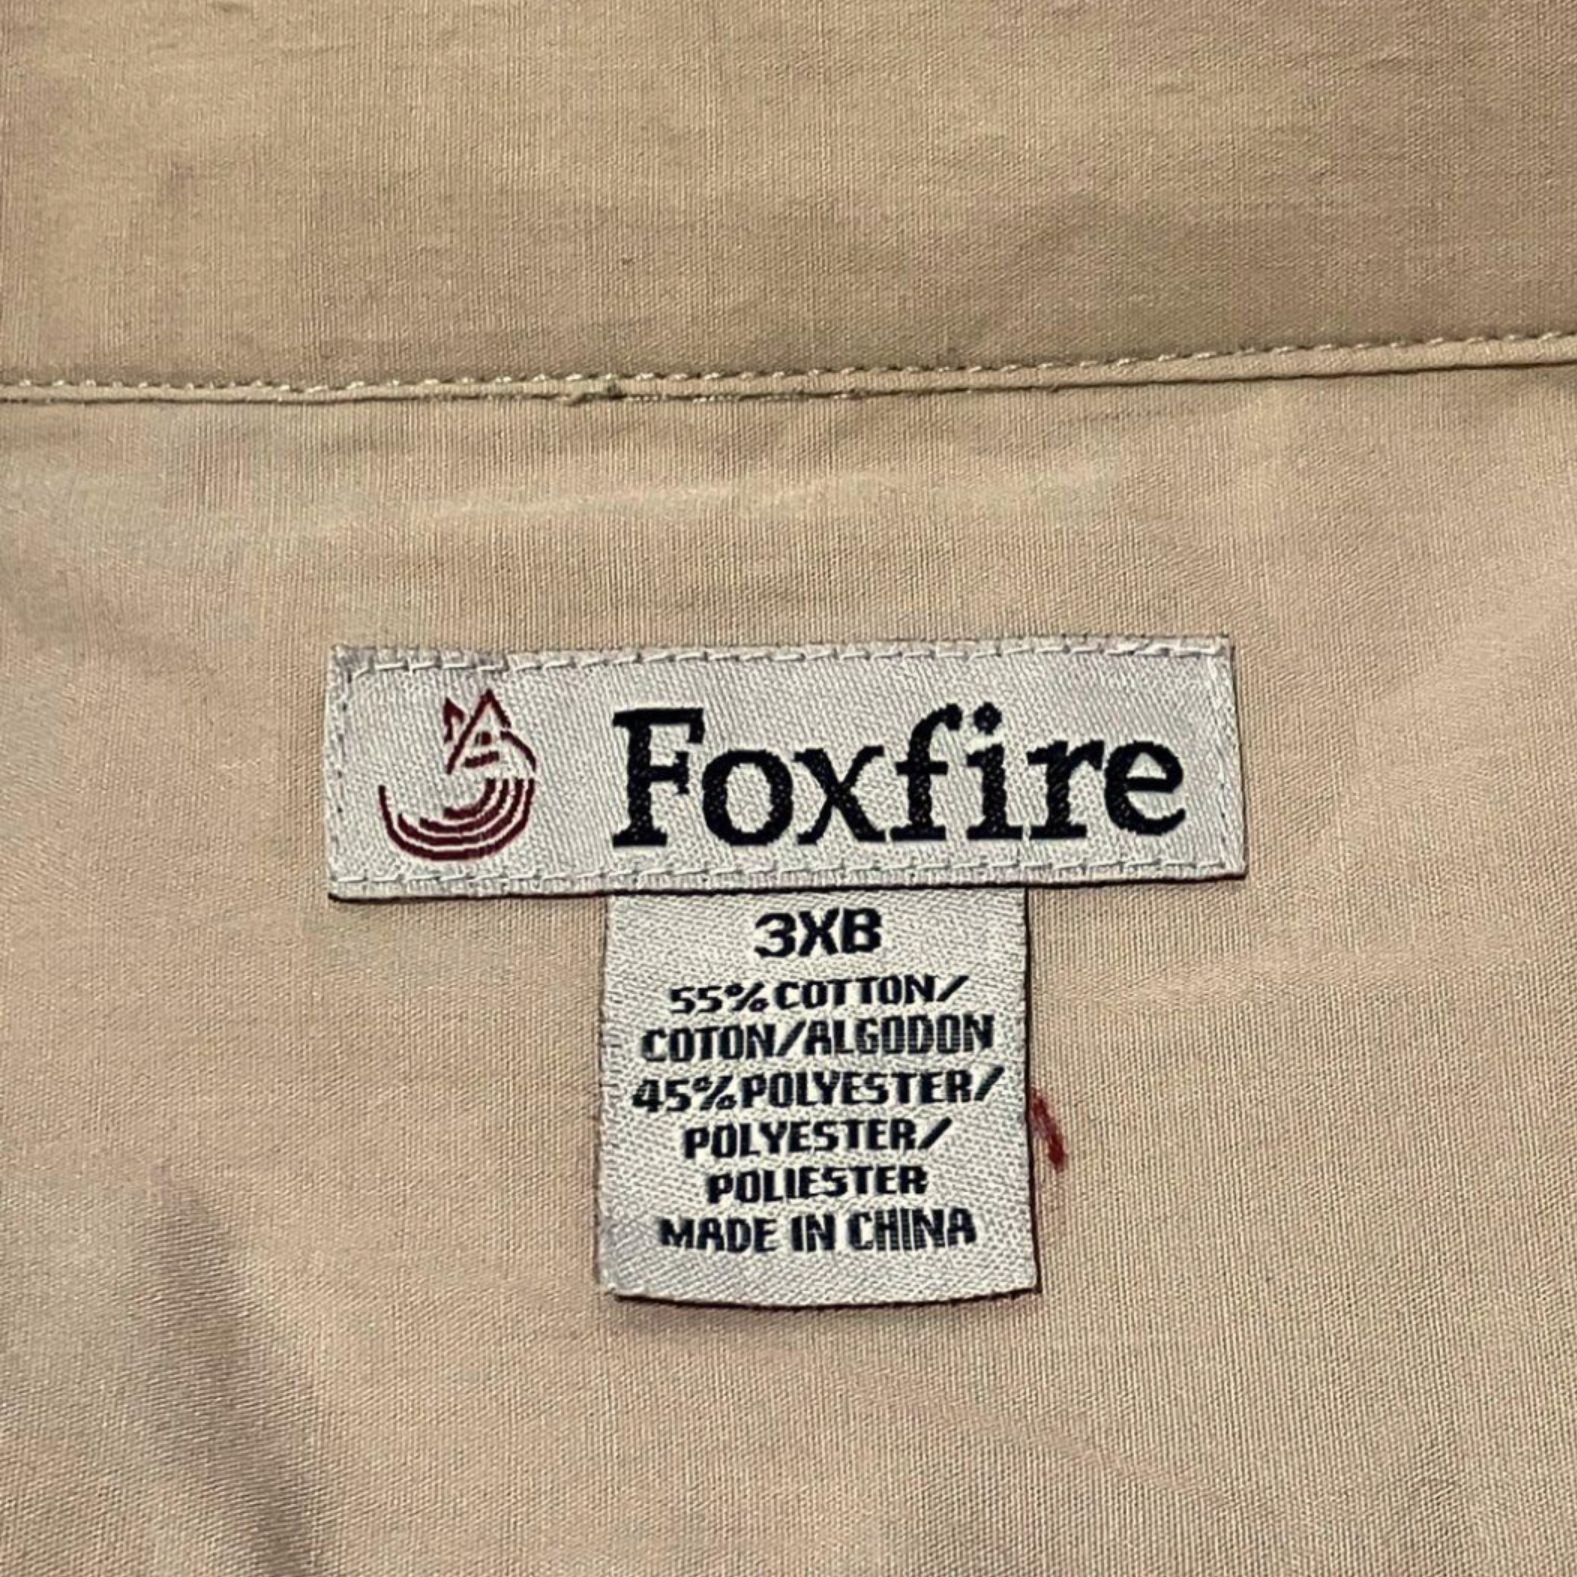 【Foxfire】刺繍入りキューバシャツA-895